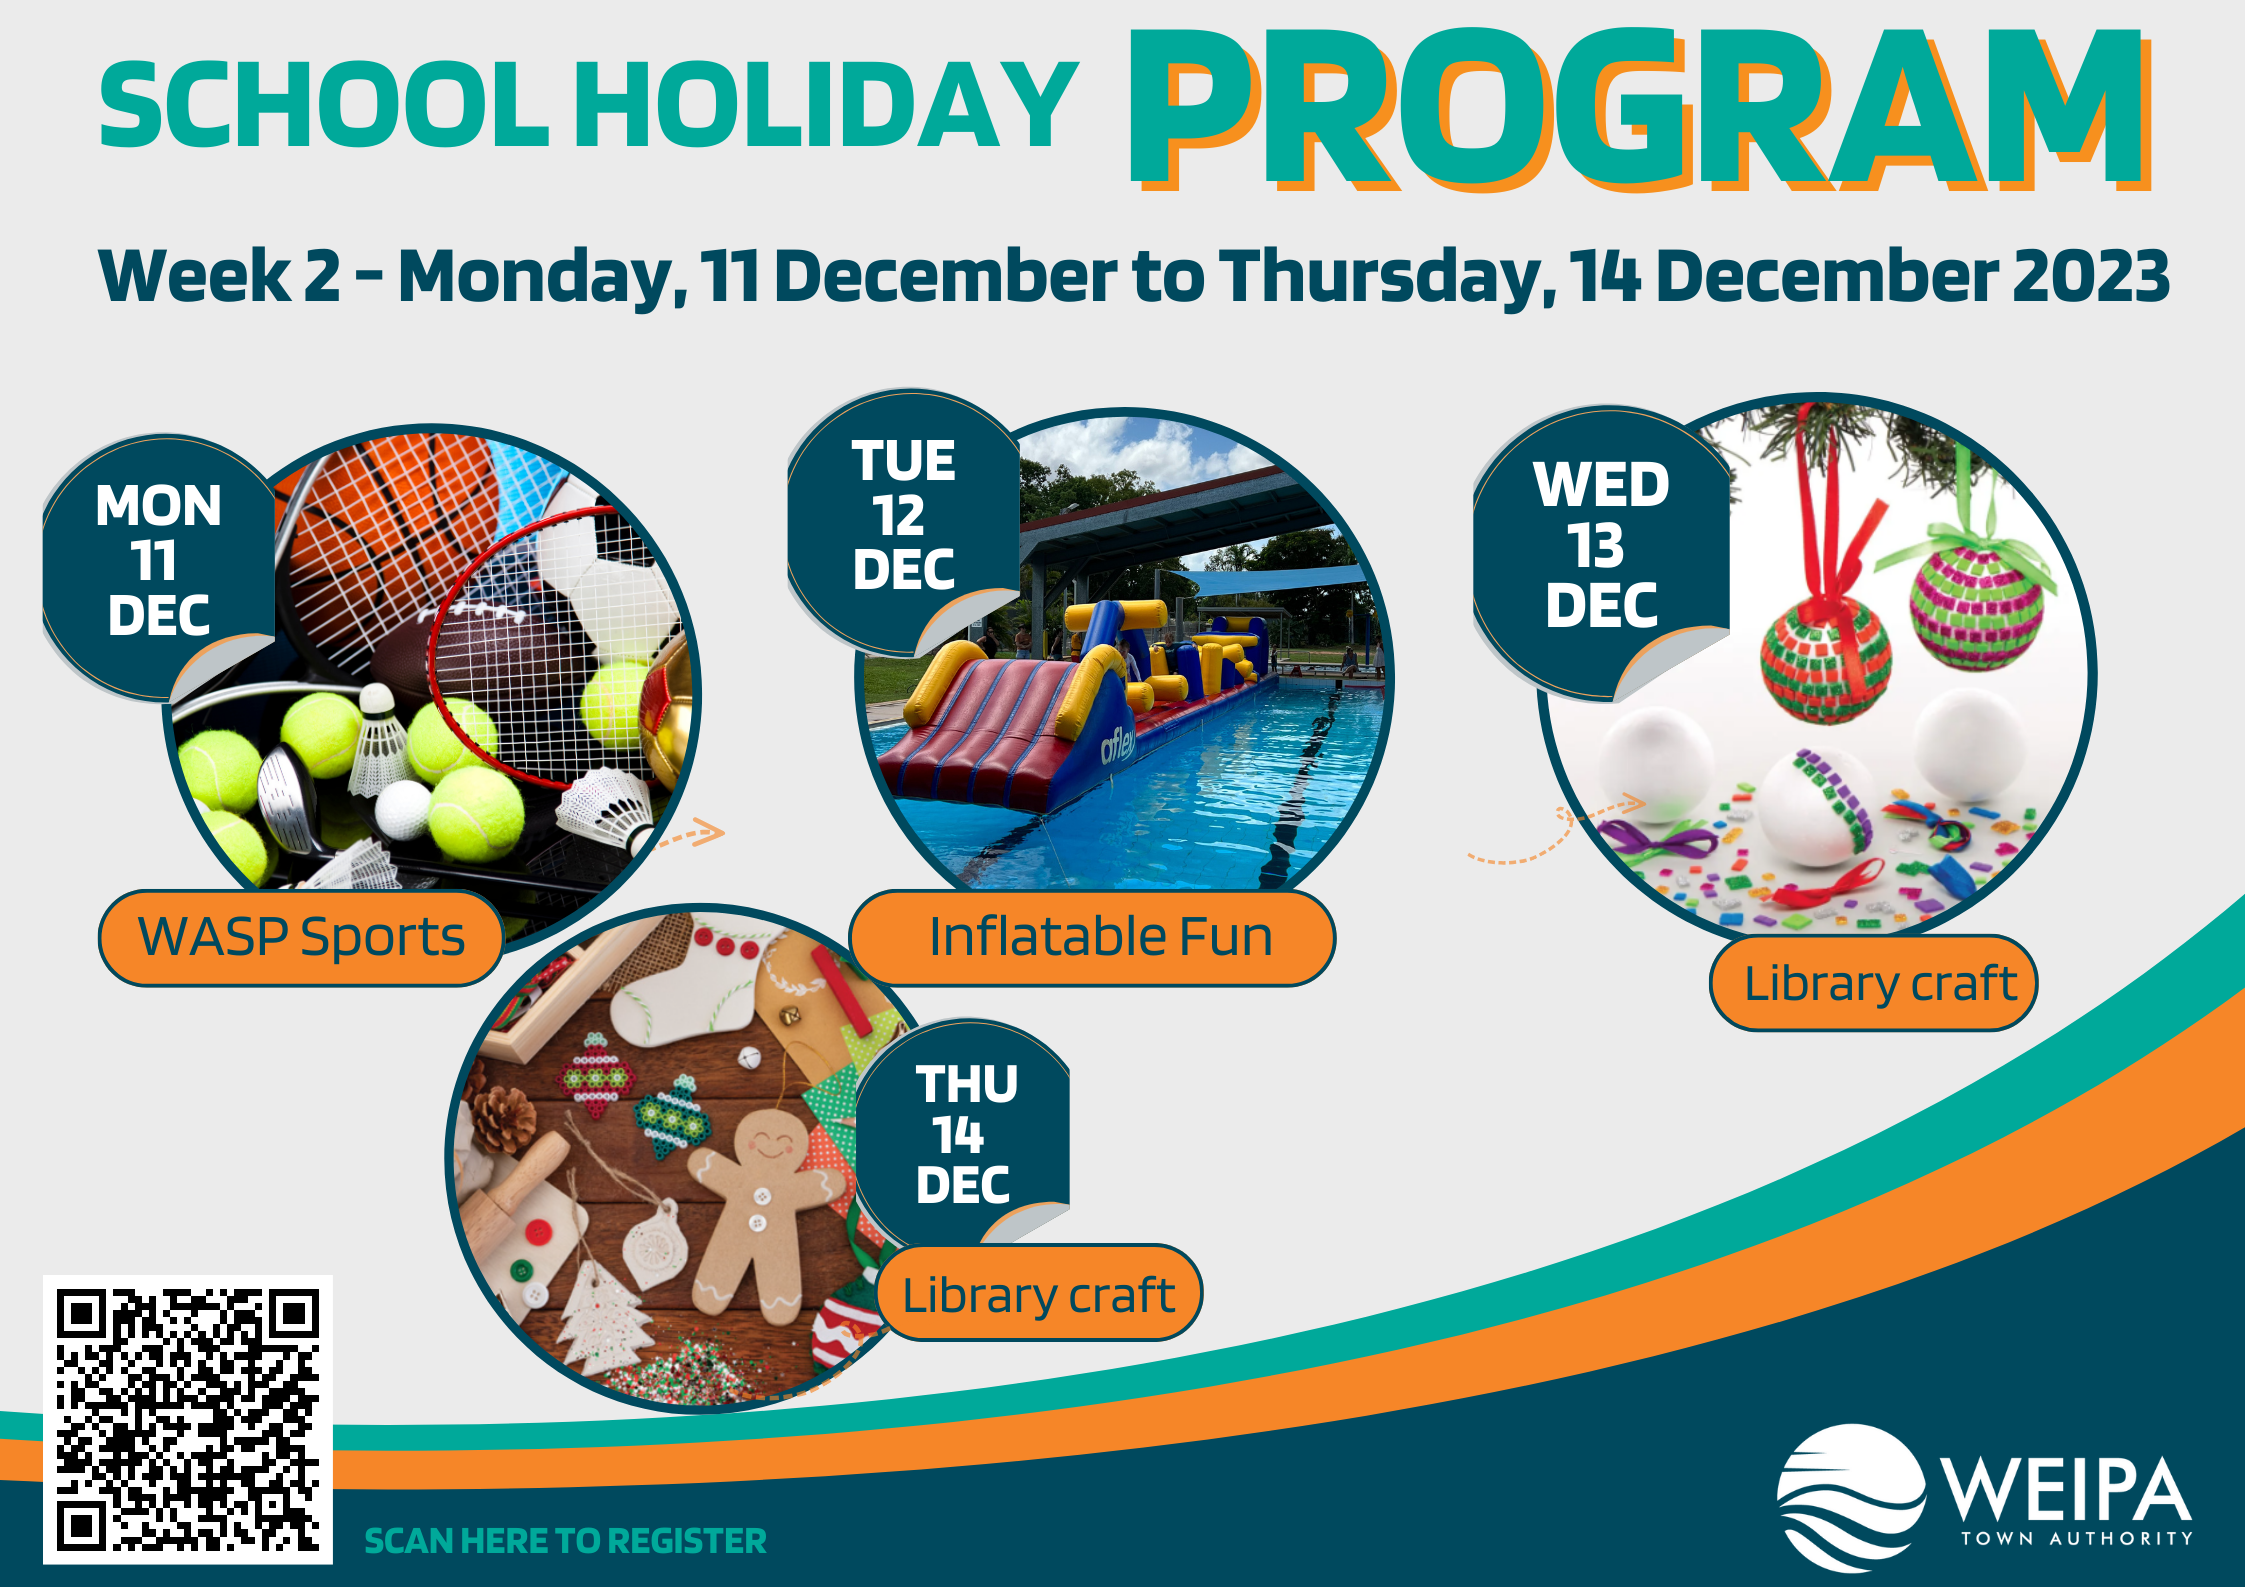 School Holiday Program - Week 2